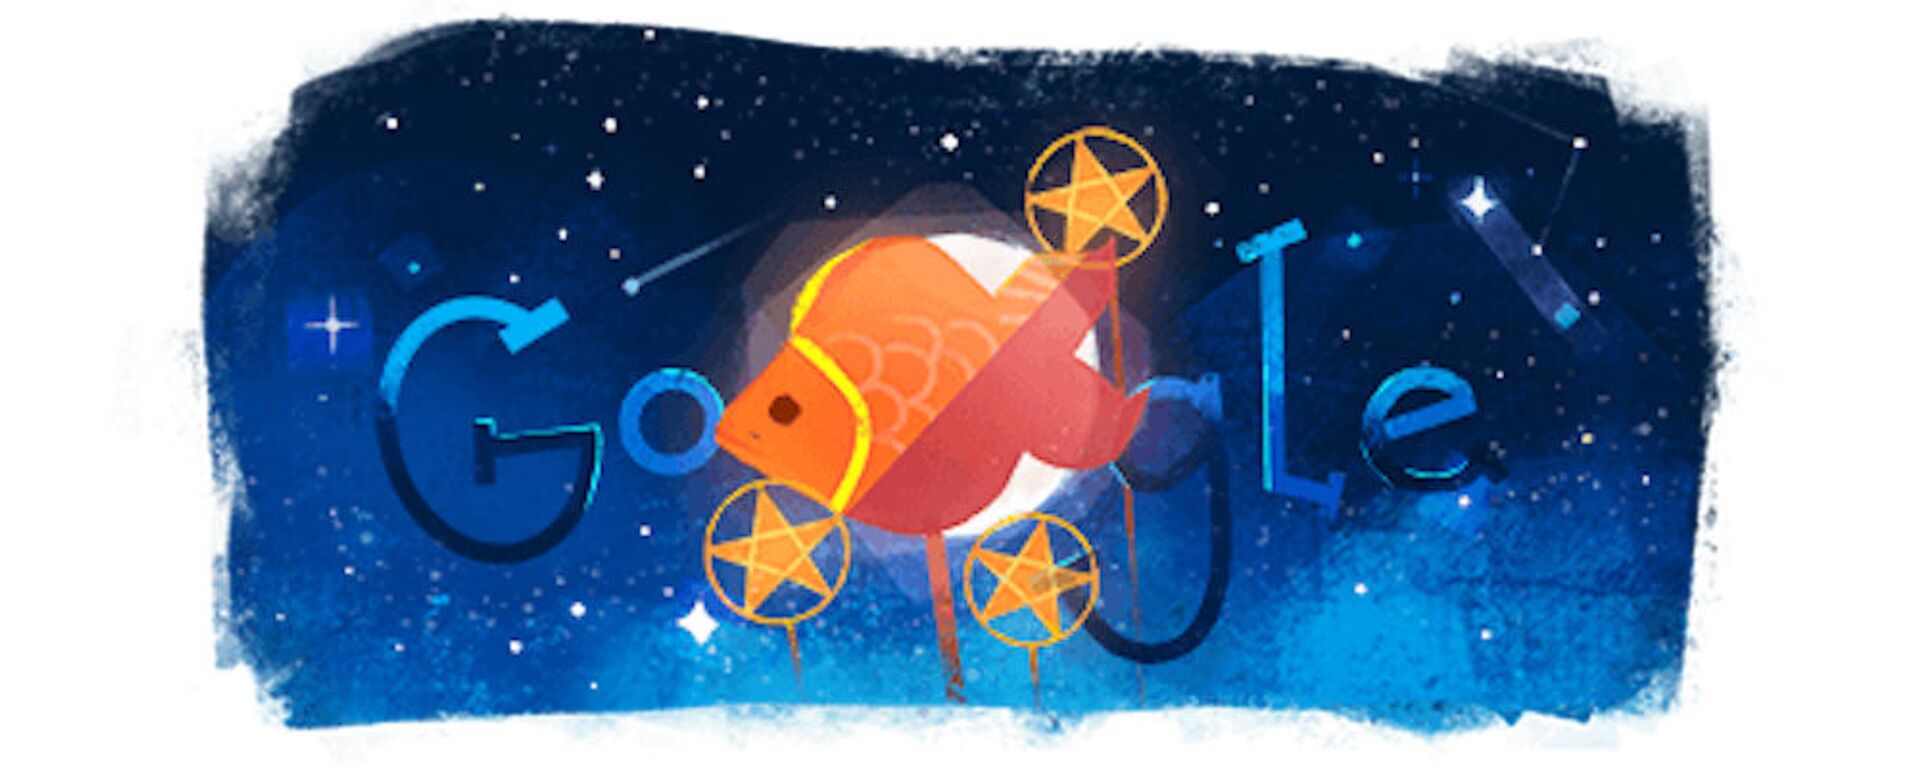 Google Doodle chúc mừng Tết Trung thu ở Việt Nam - Sputnik Việt Nam, 1920, 05.10.2021